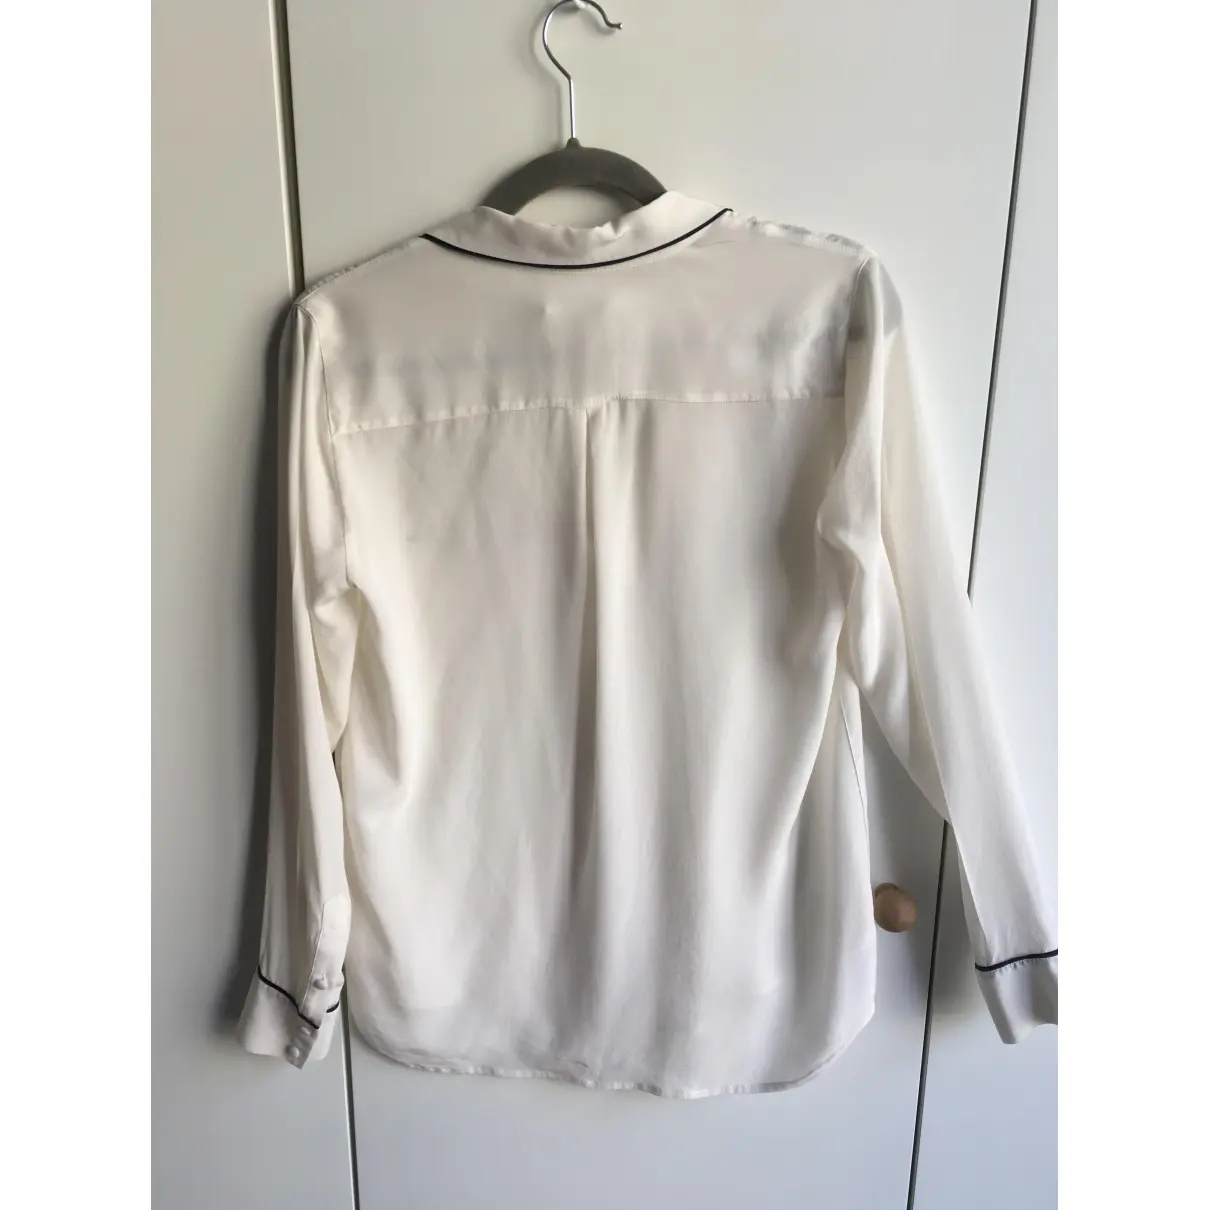 Buy Sézane Spring Summer 2019 silk blouse online